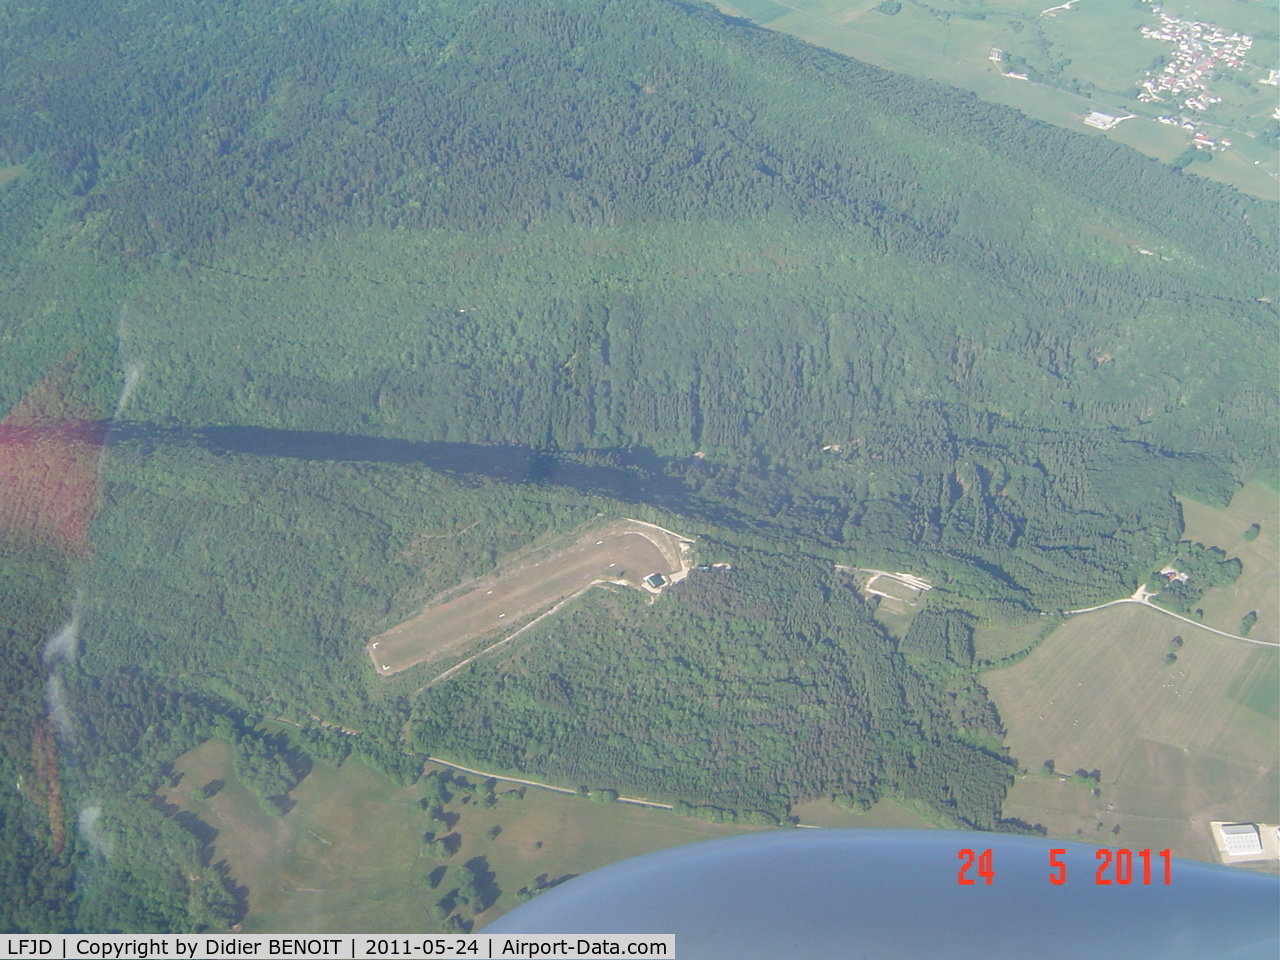 Corlier Airport, Corlier France (LFJD) - Altiport à usage restreint
Montain airfield restricted use